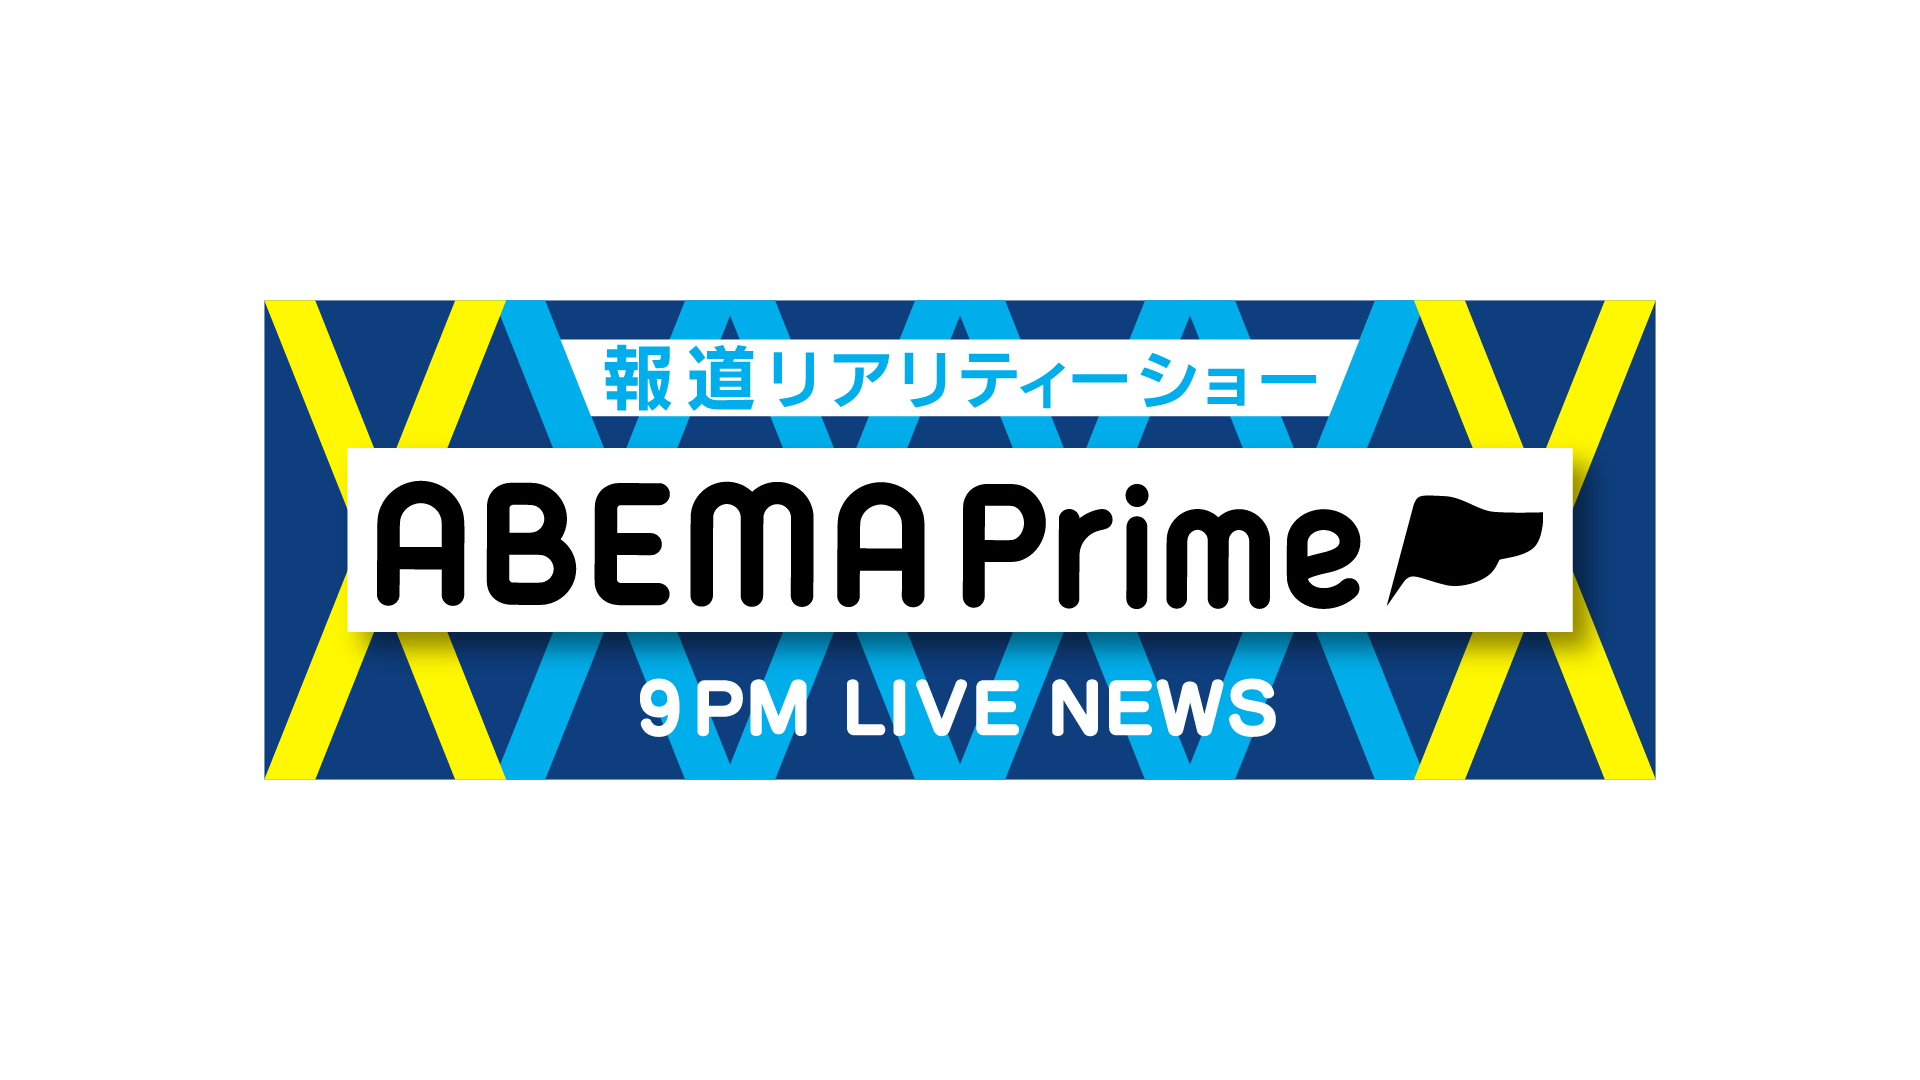 Abema Prime出演 プレティア テクノロジーズ株式会社 Pretia Technologies Inc